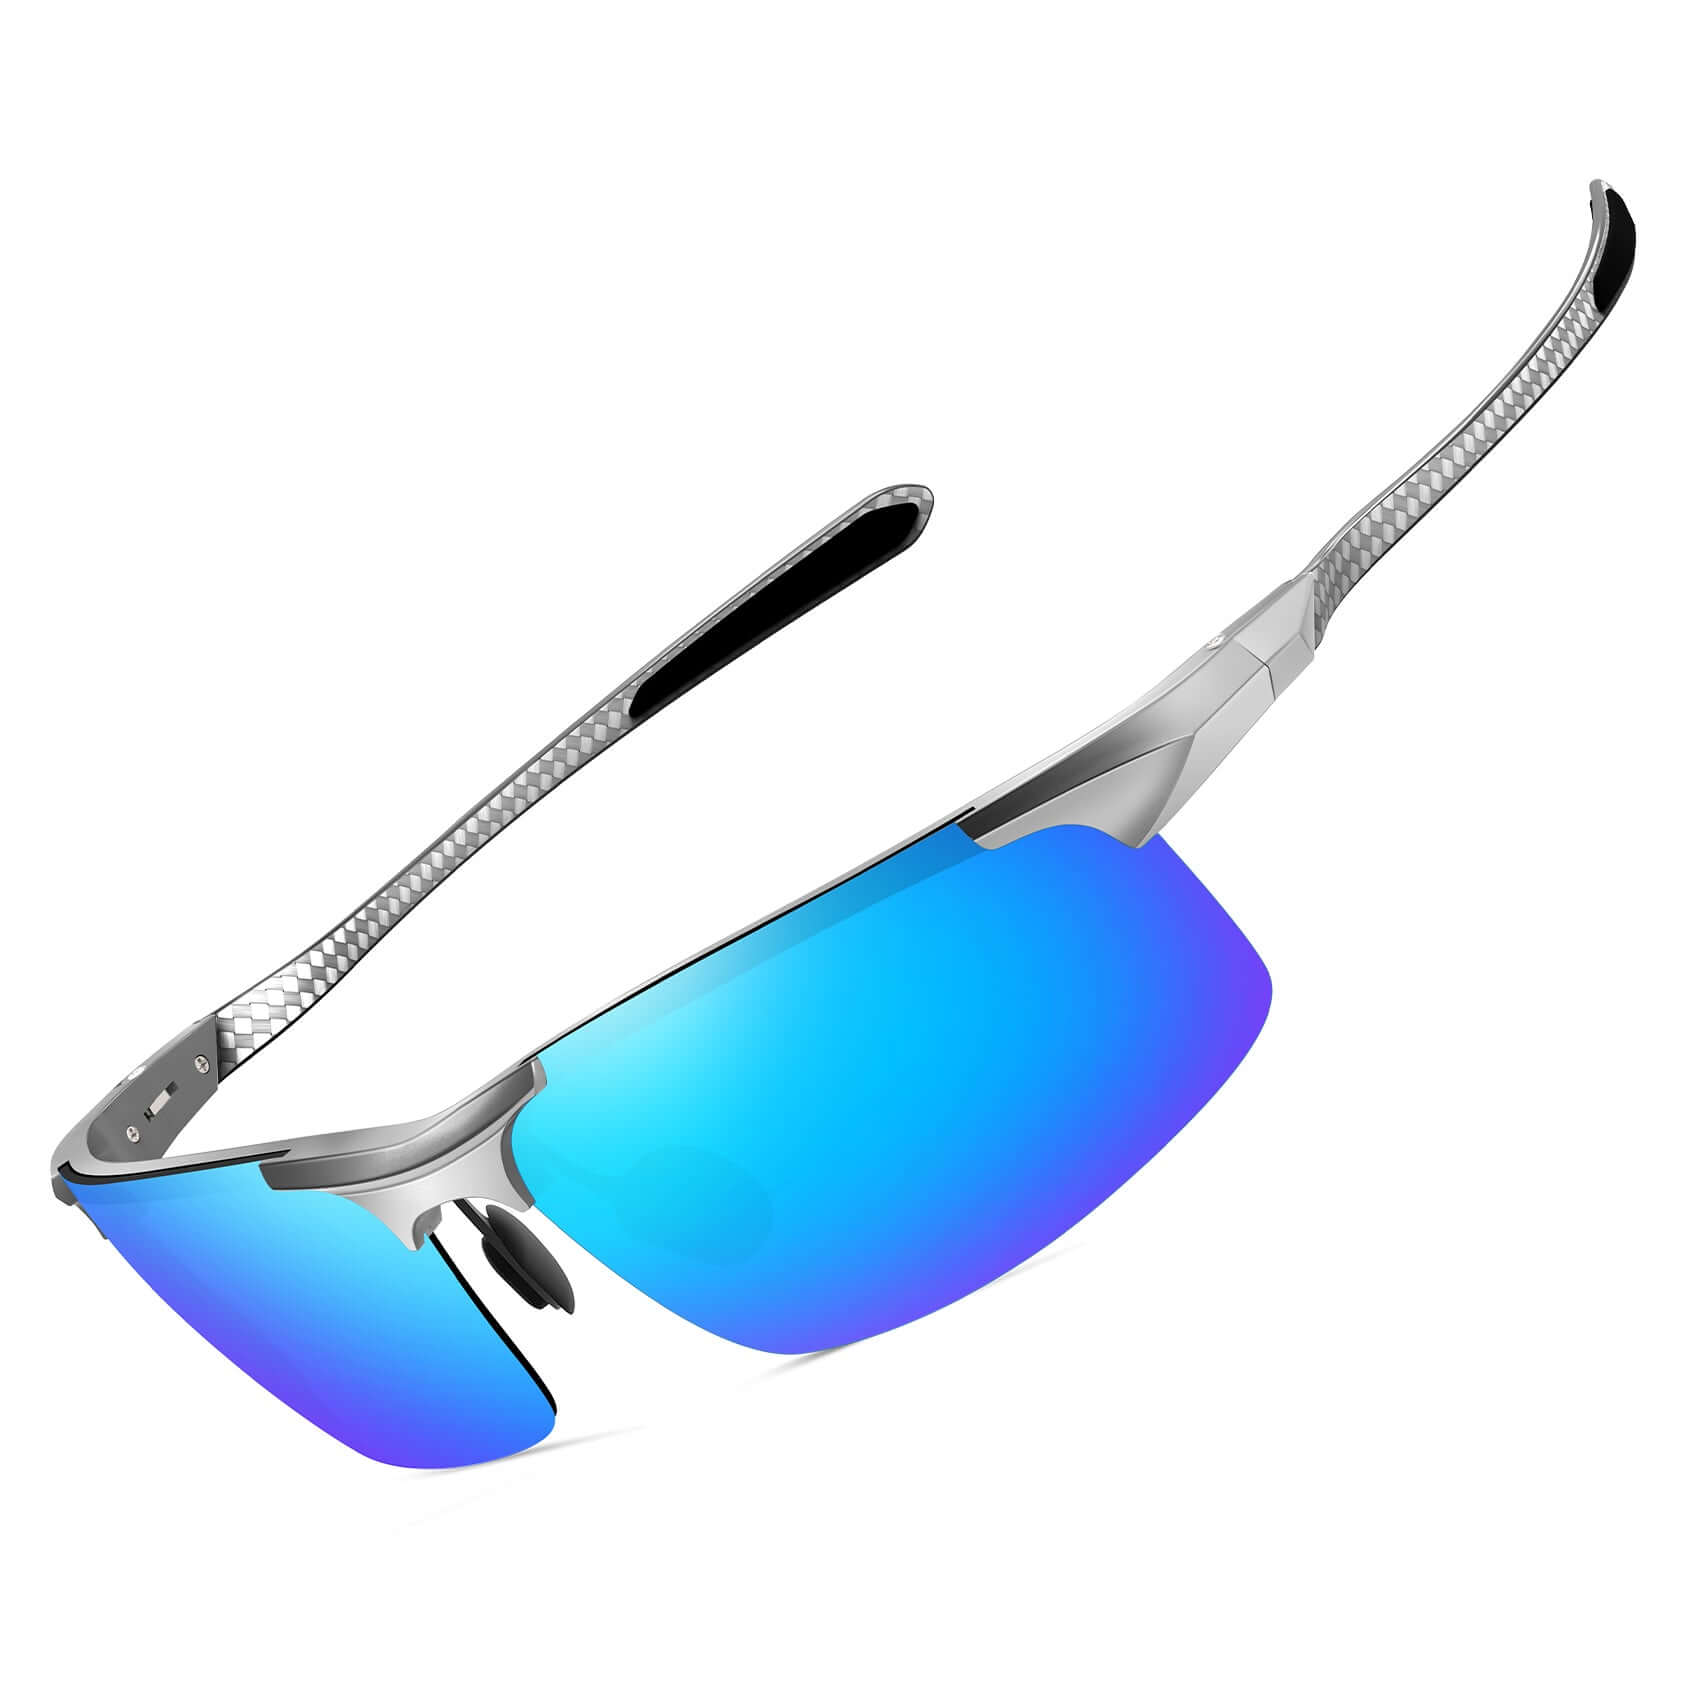 Lightweight Al-Mg Carbon Fiber Polarized Sunglasses A69